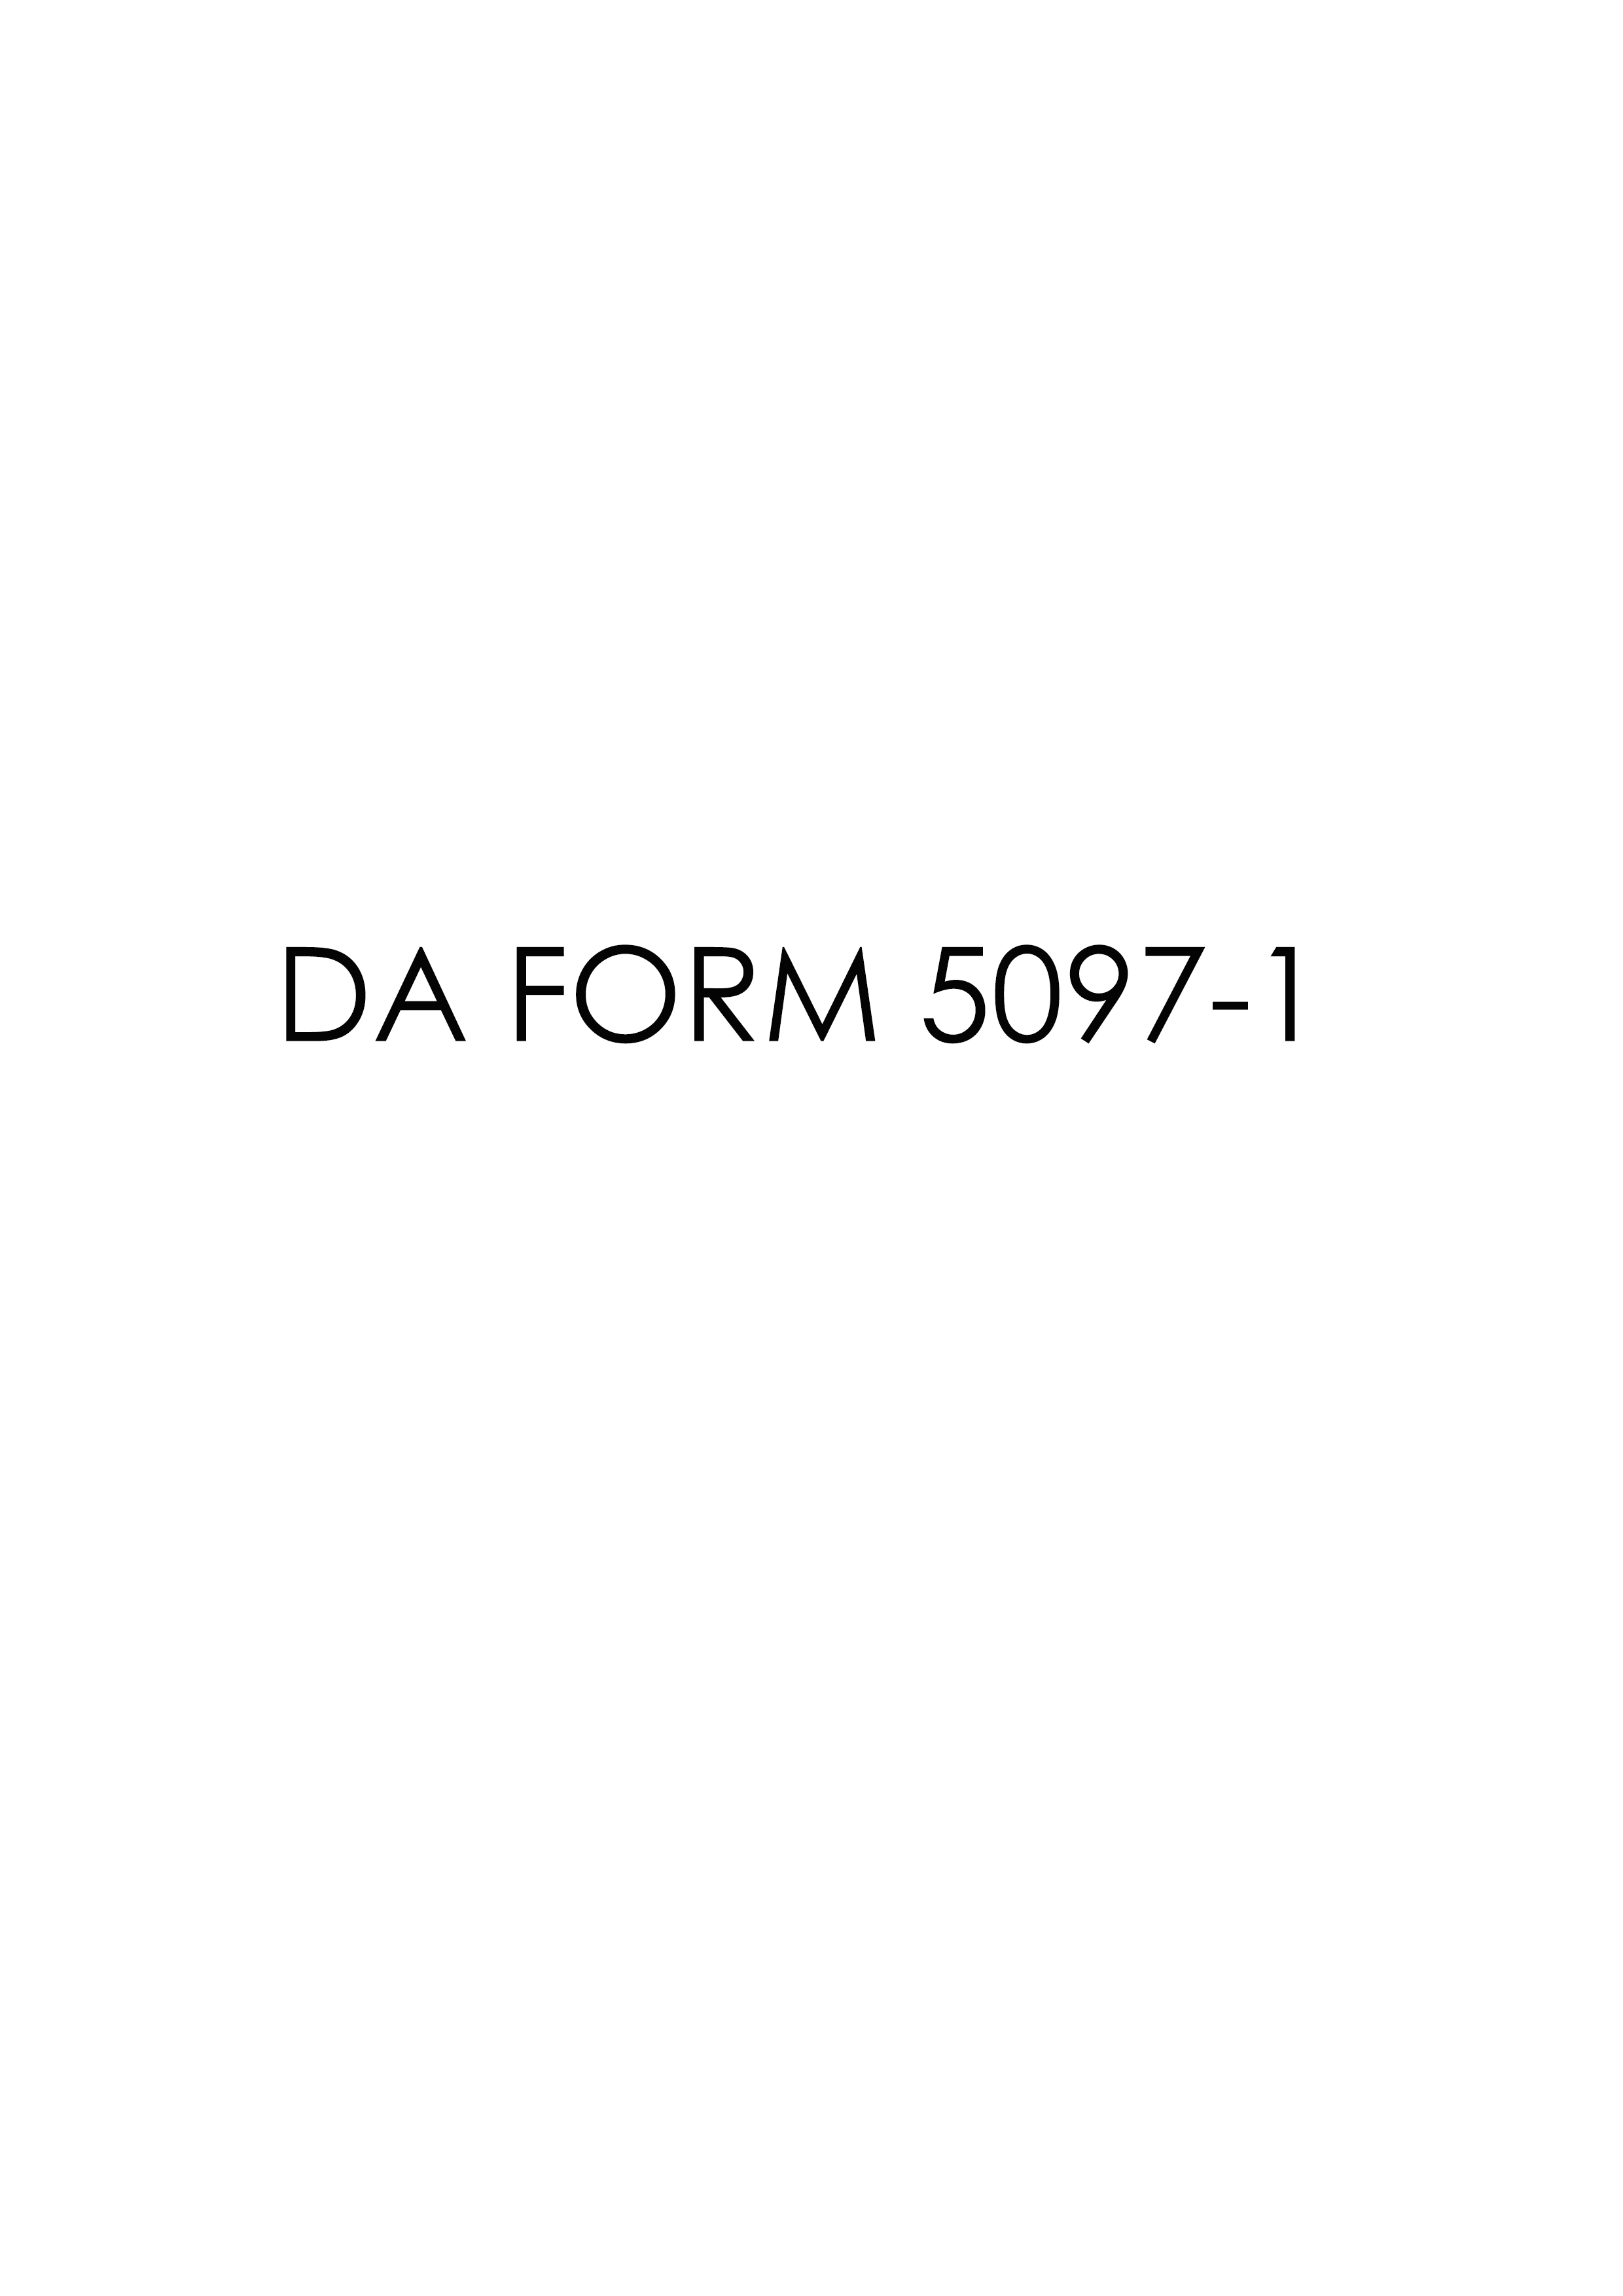 da Form 5097-1 fillable